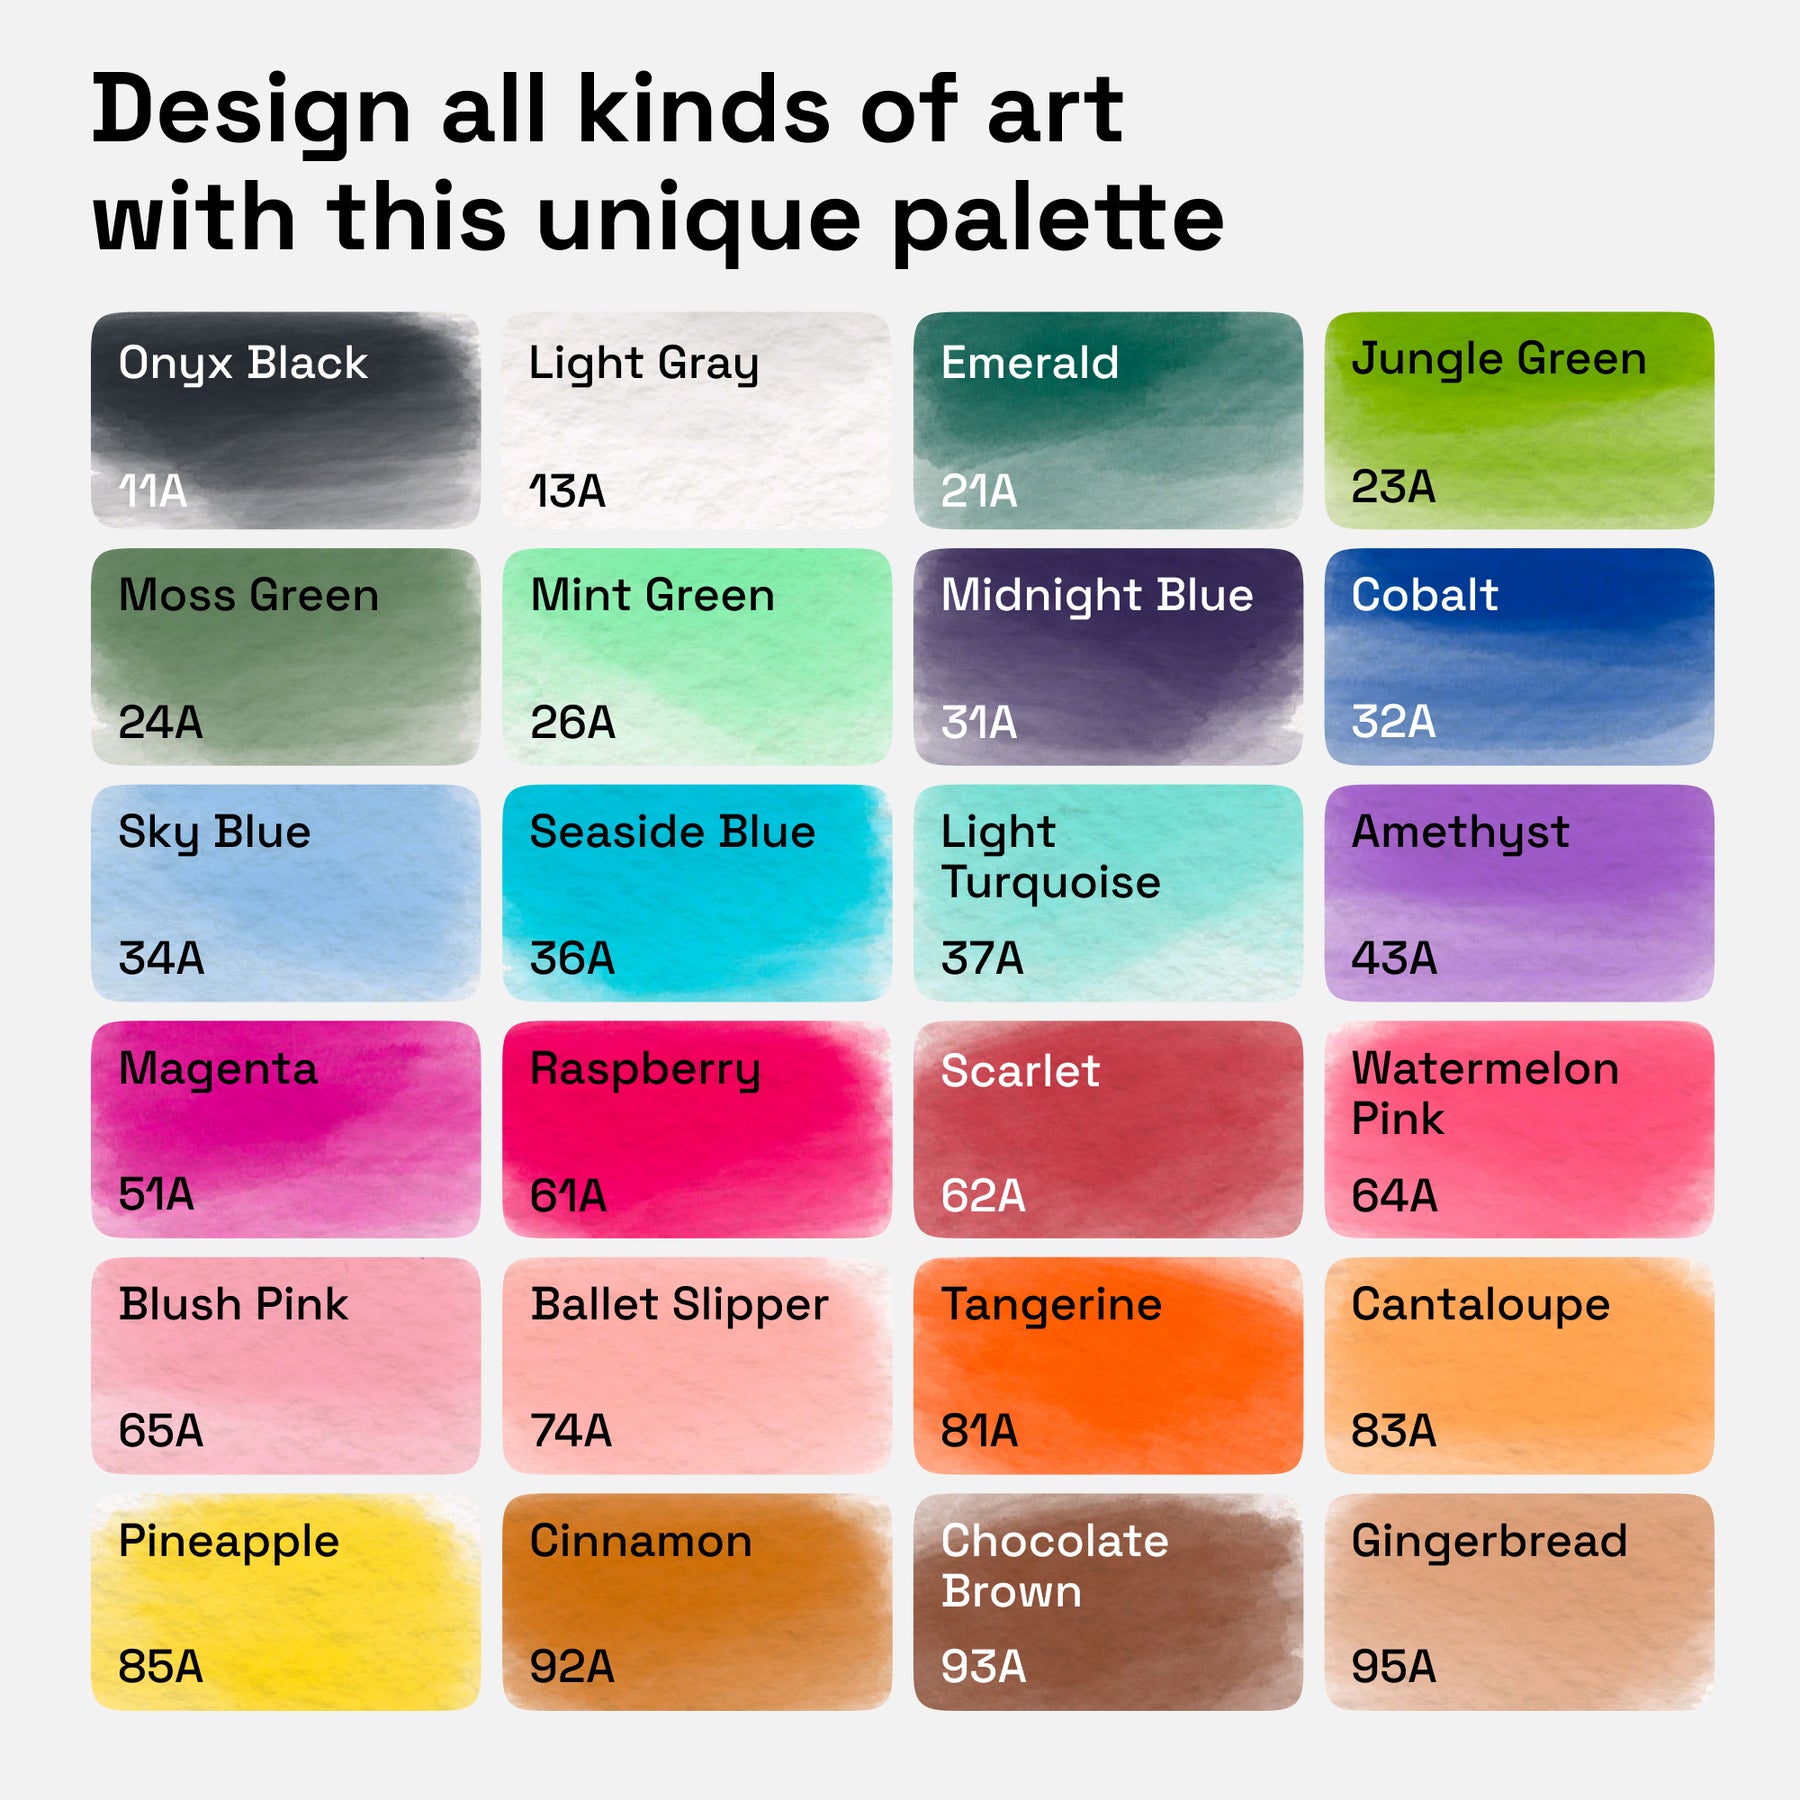 24-color Barreled Pen, Painting Art Marker Pen, Watercolor Brush